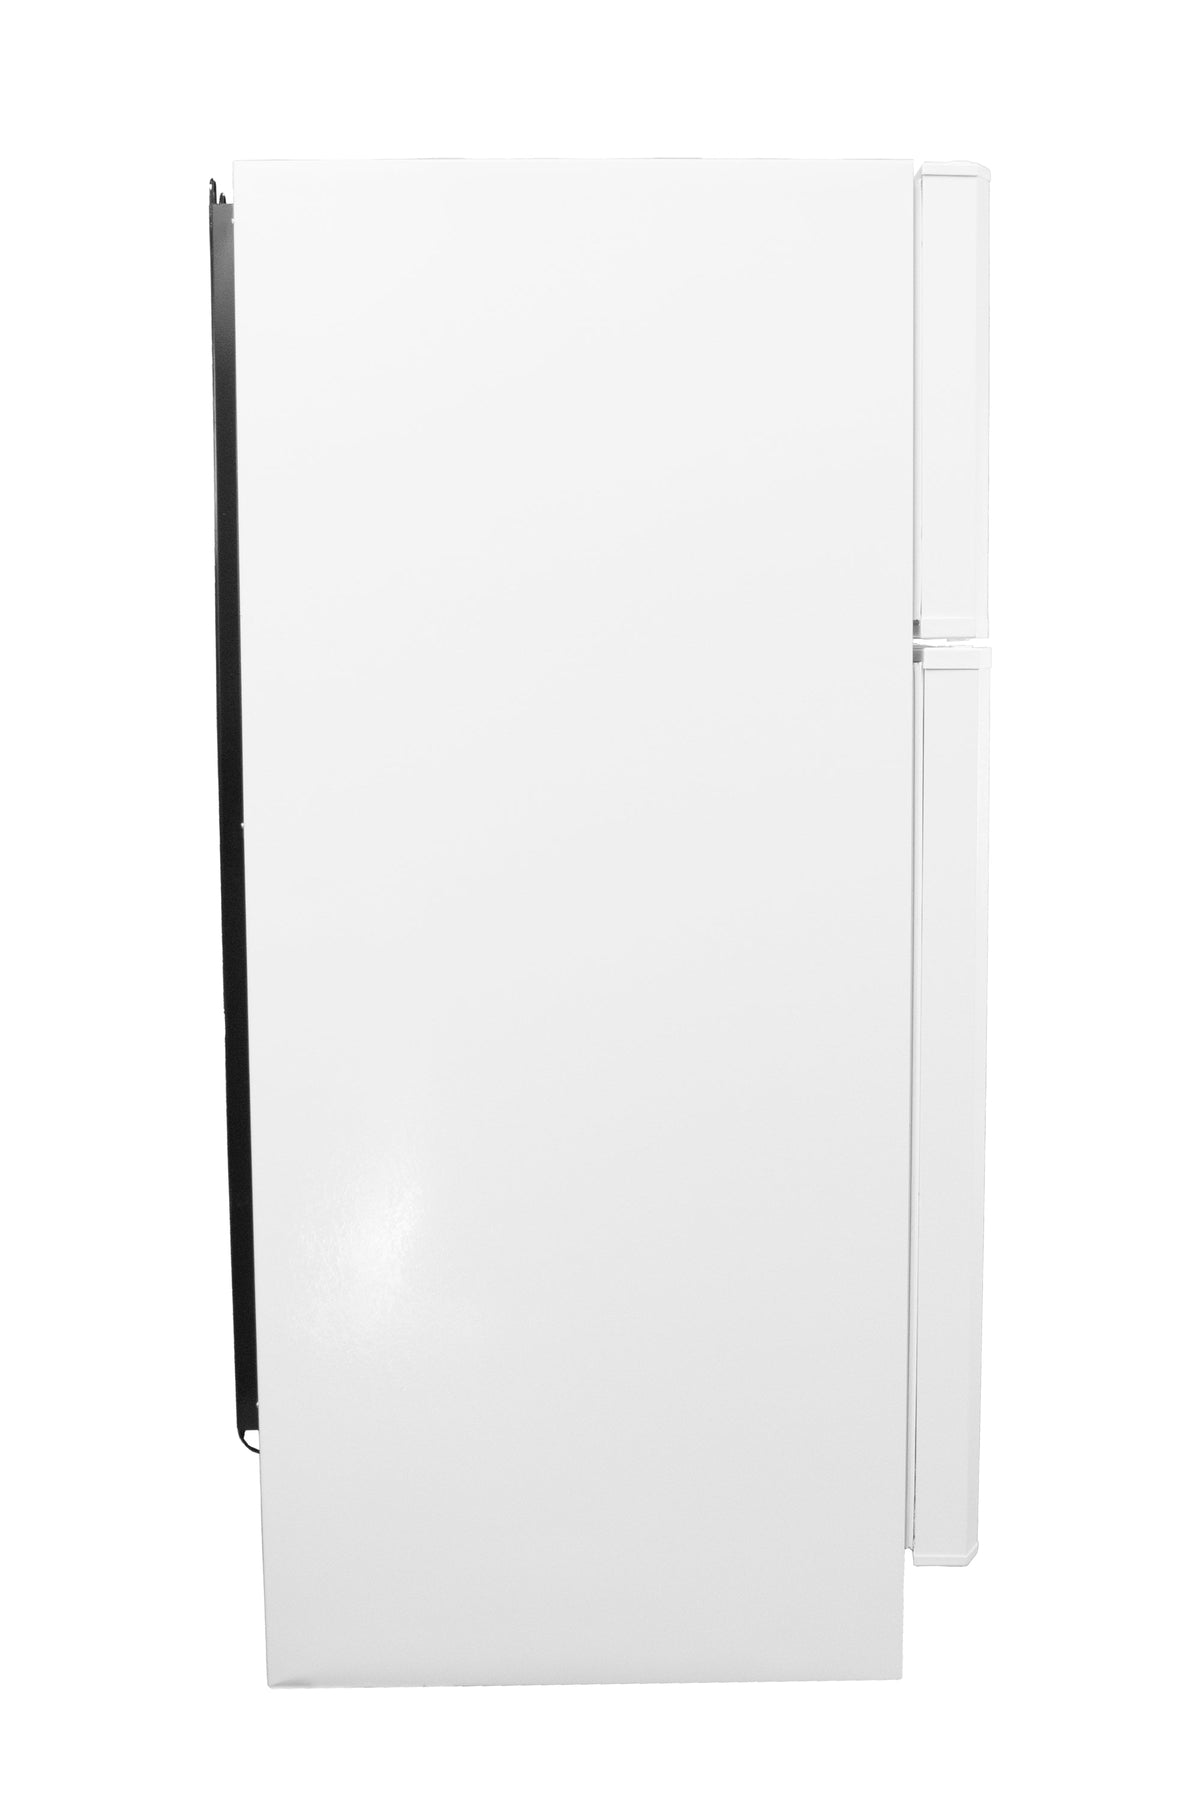 SunStar/SolarFreeze Solar Appliances Sunstar ST-16RF 16 cu. ft. Low Voltage Solar DC Powered Refrigerator-Freezer in White